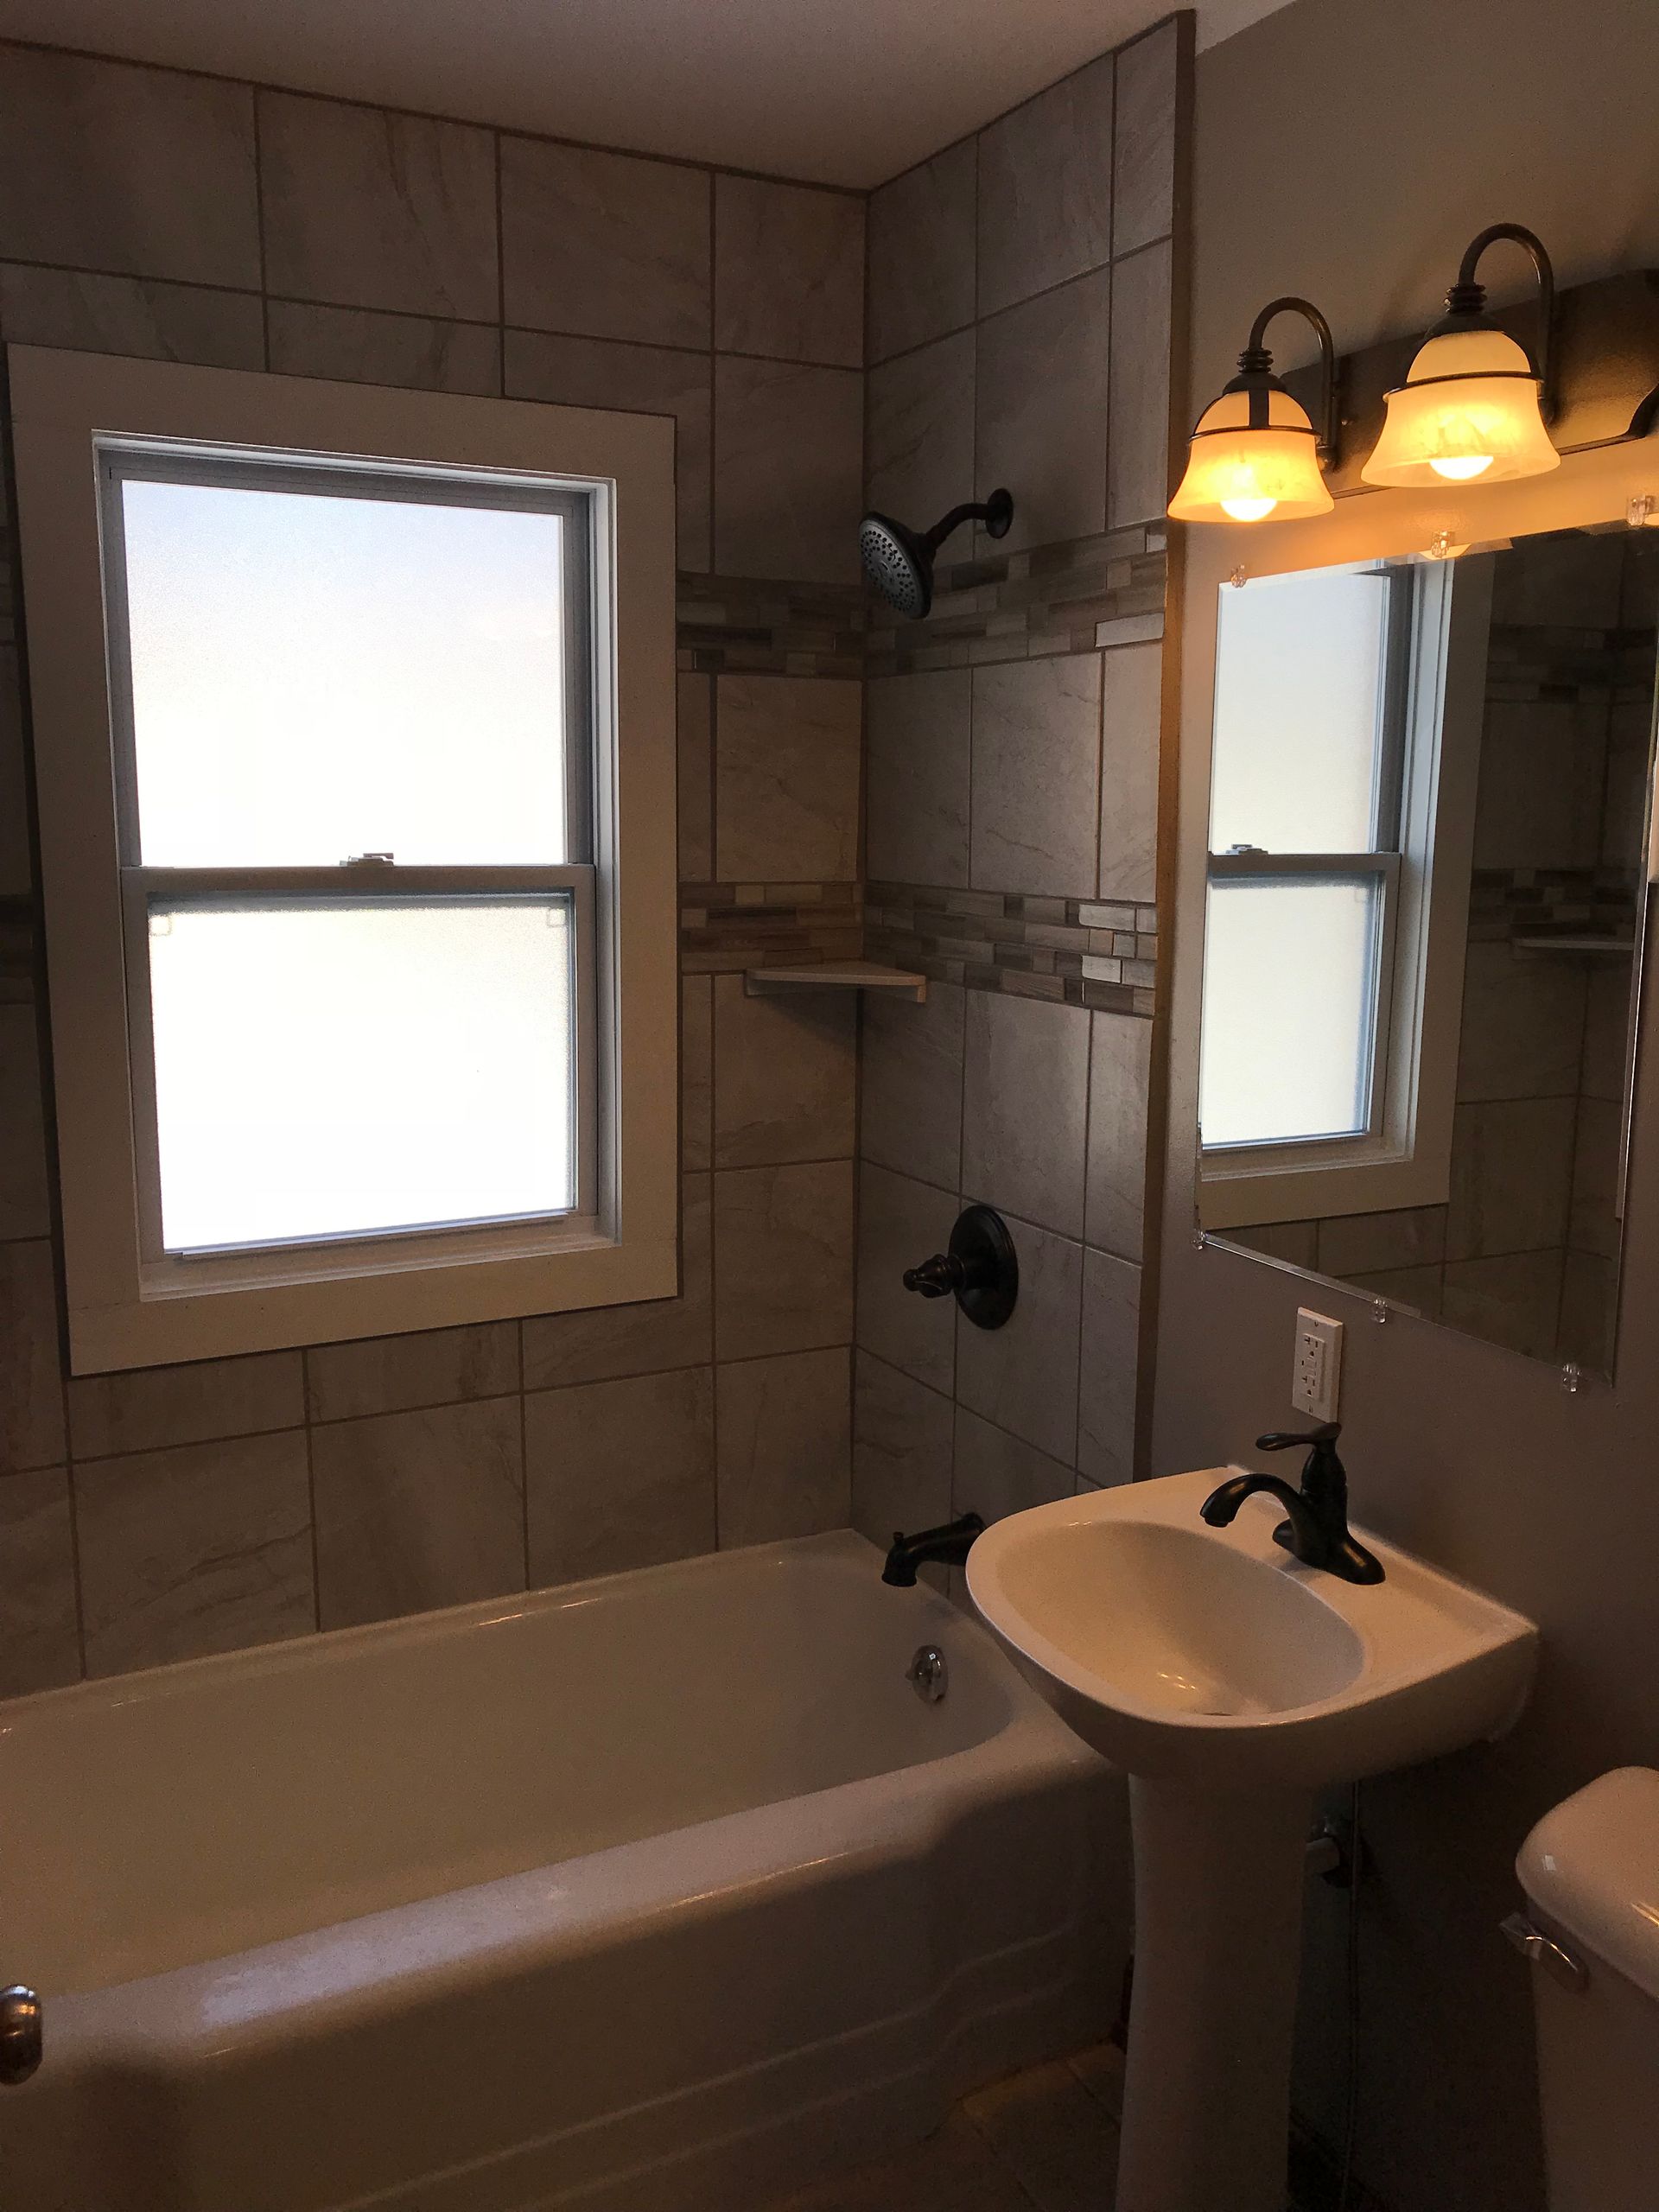 A bathroom with a sink a tub and a window